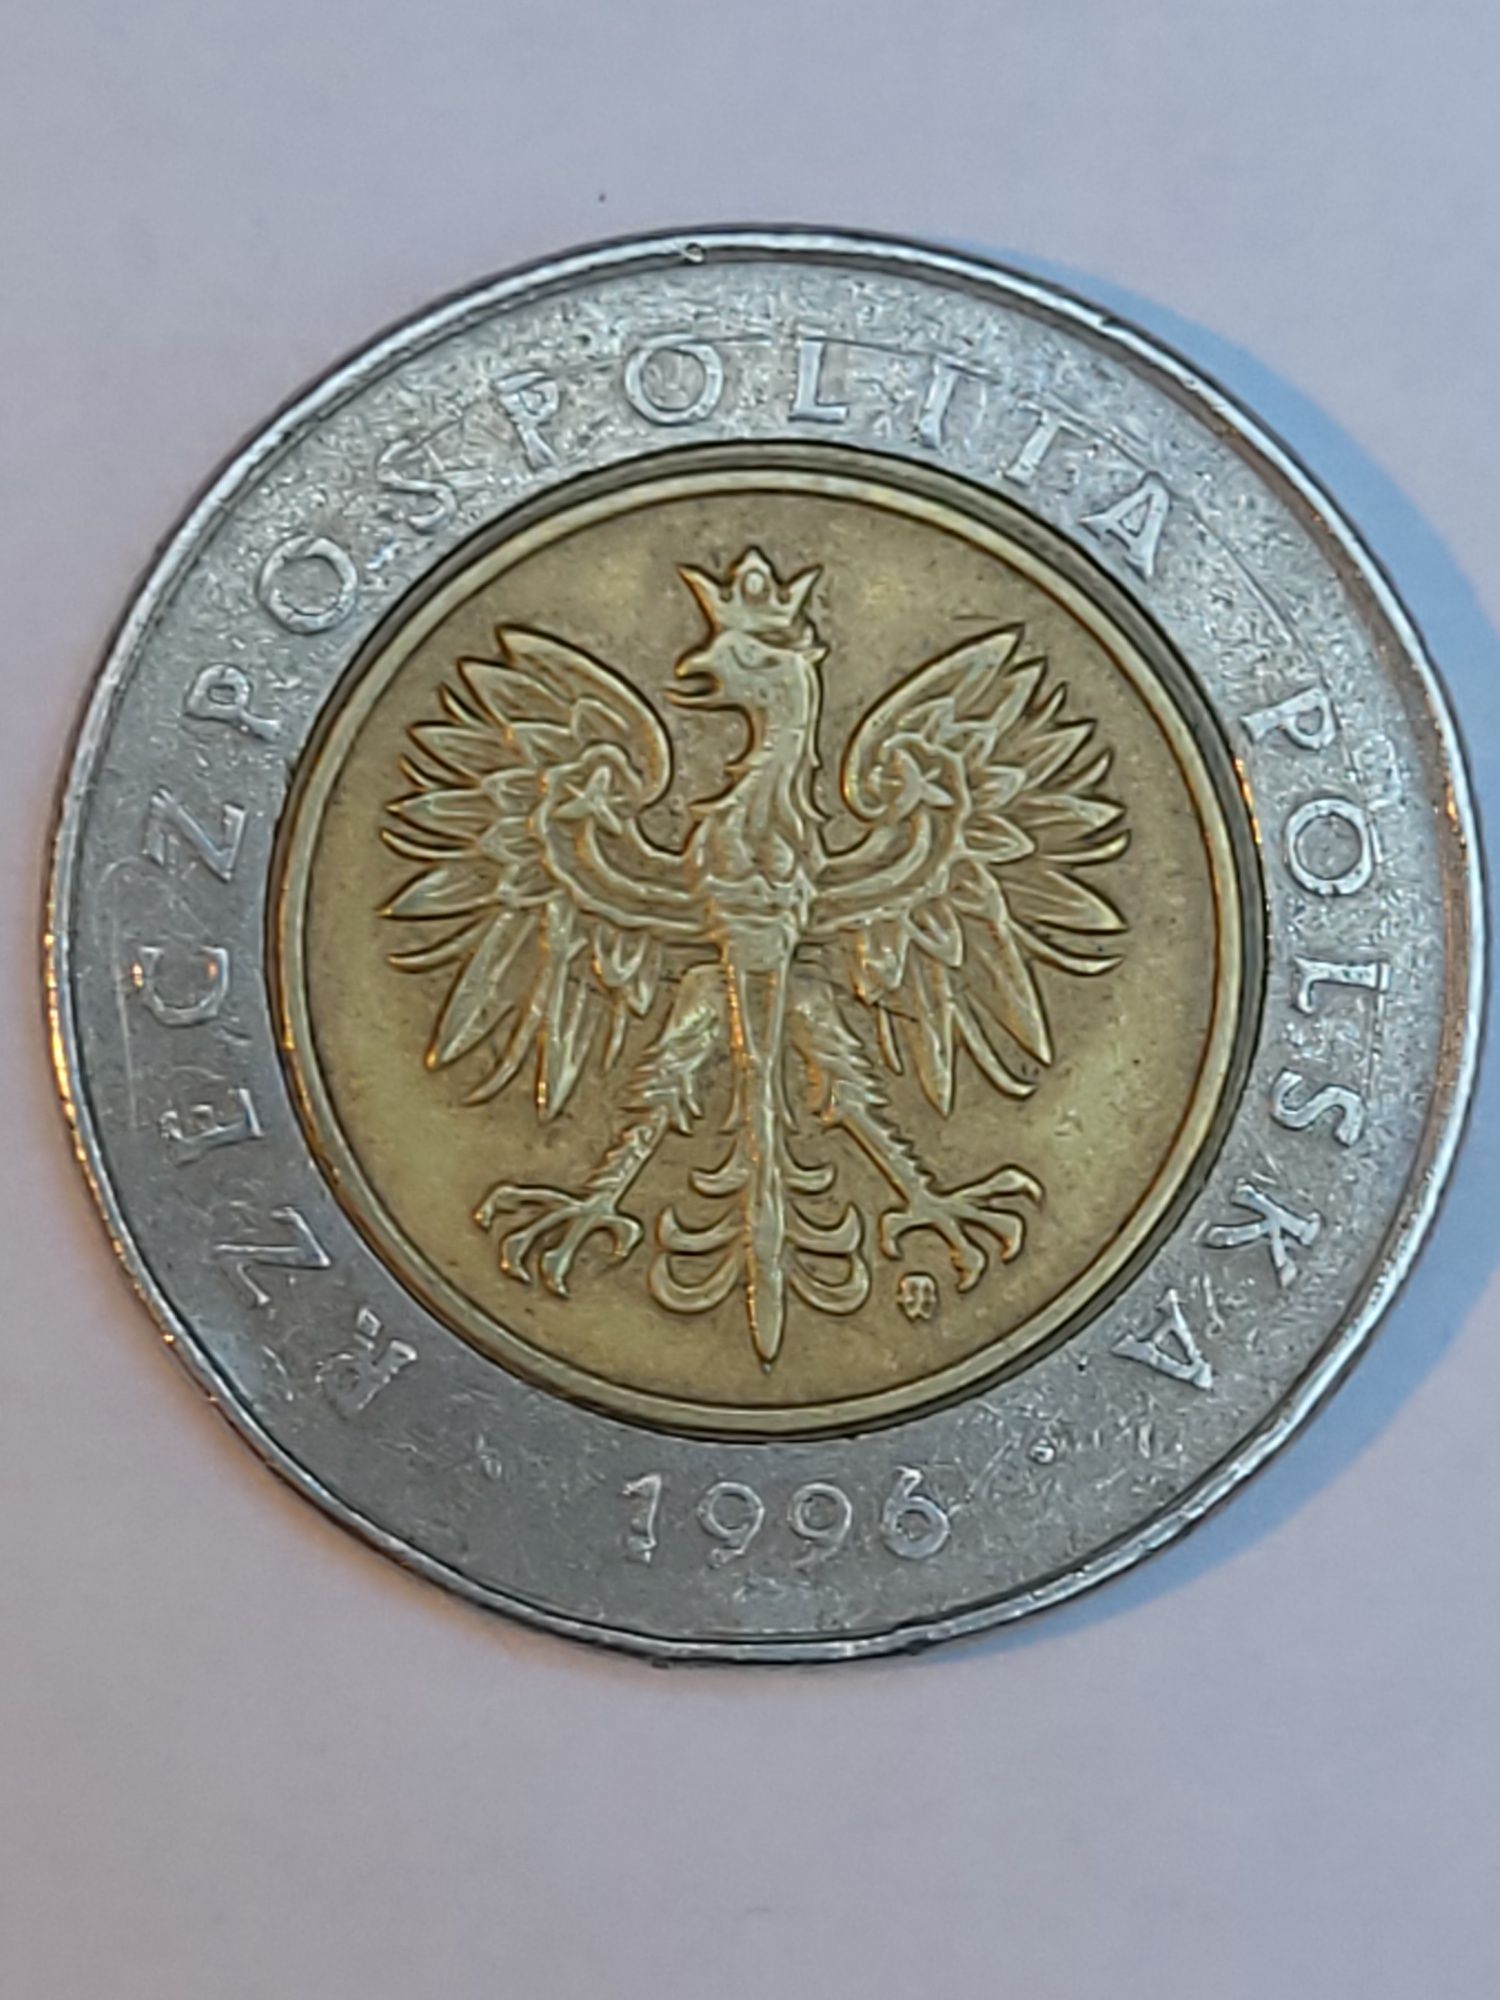 Destrukt Moneta 5 zł 1996 rok